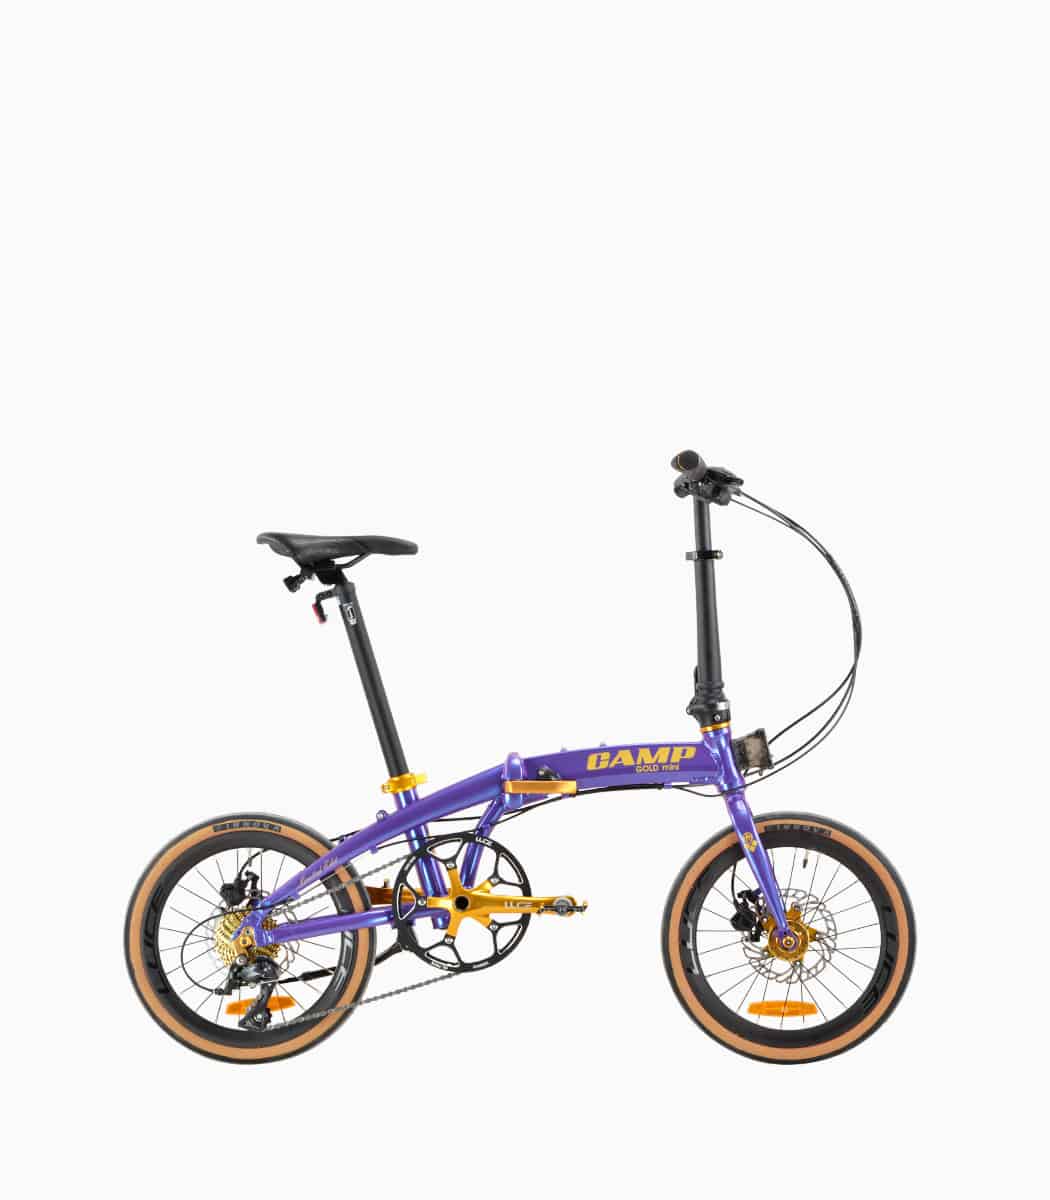 CAMP GOLD Mini (METALLIC PURPLE) foldable bicycle right